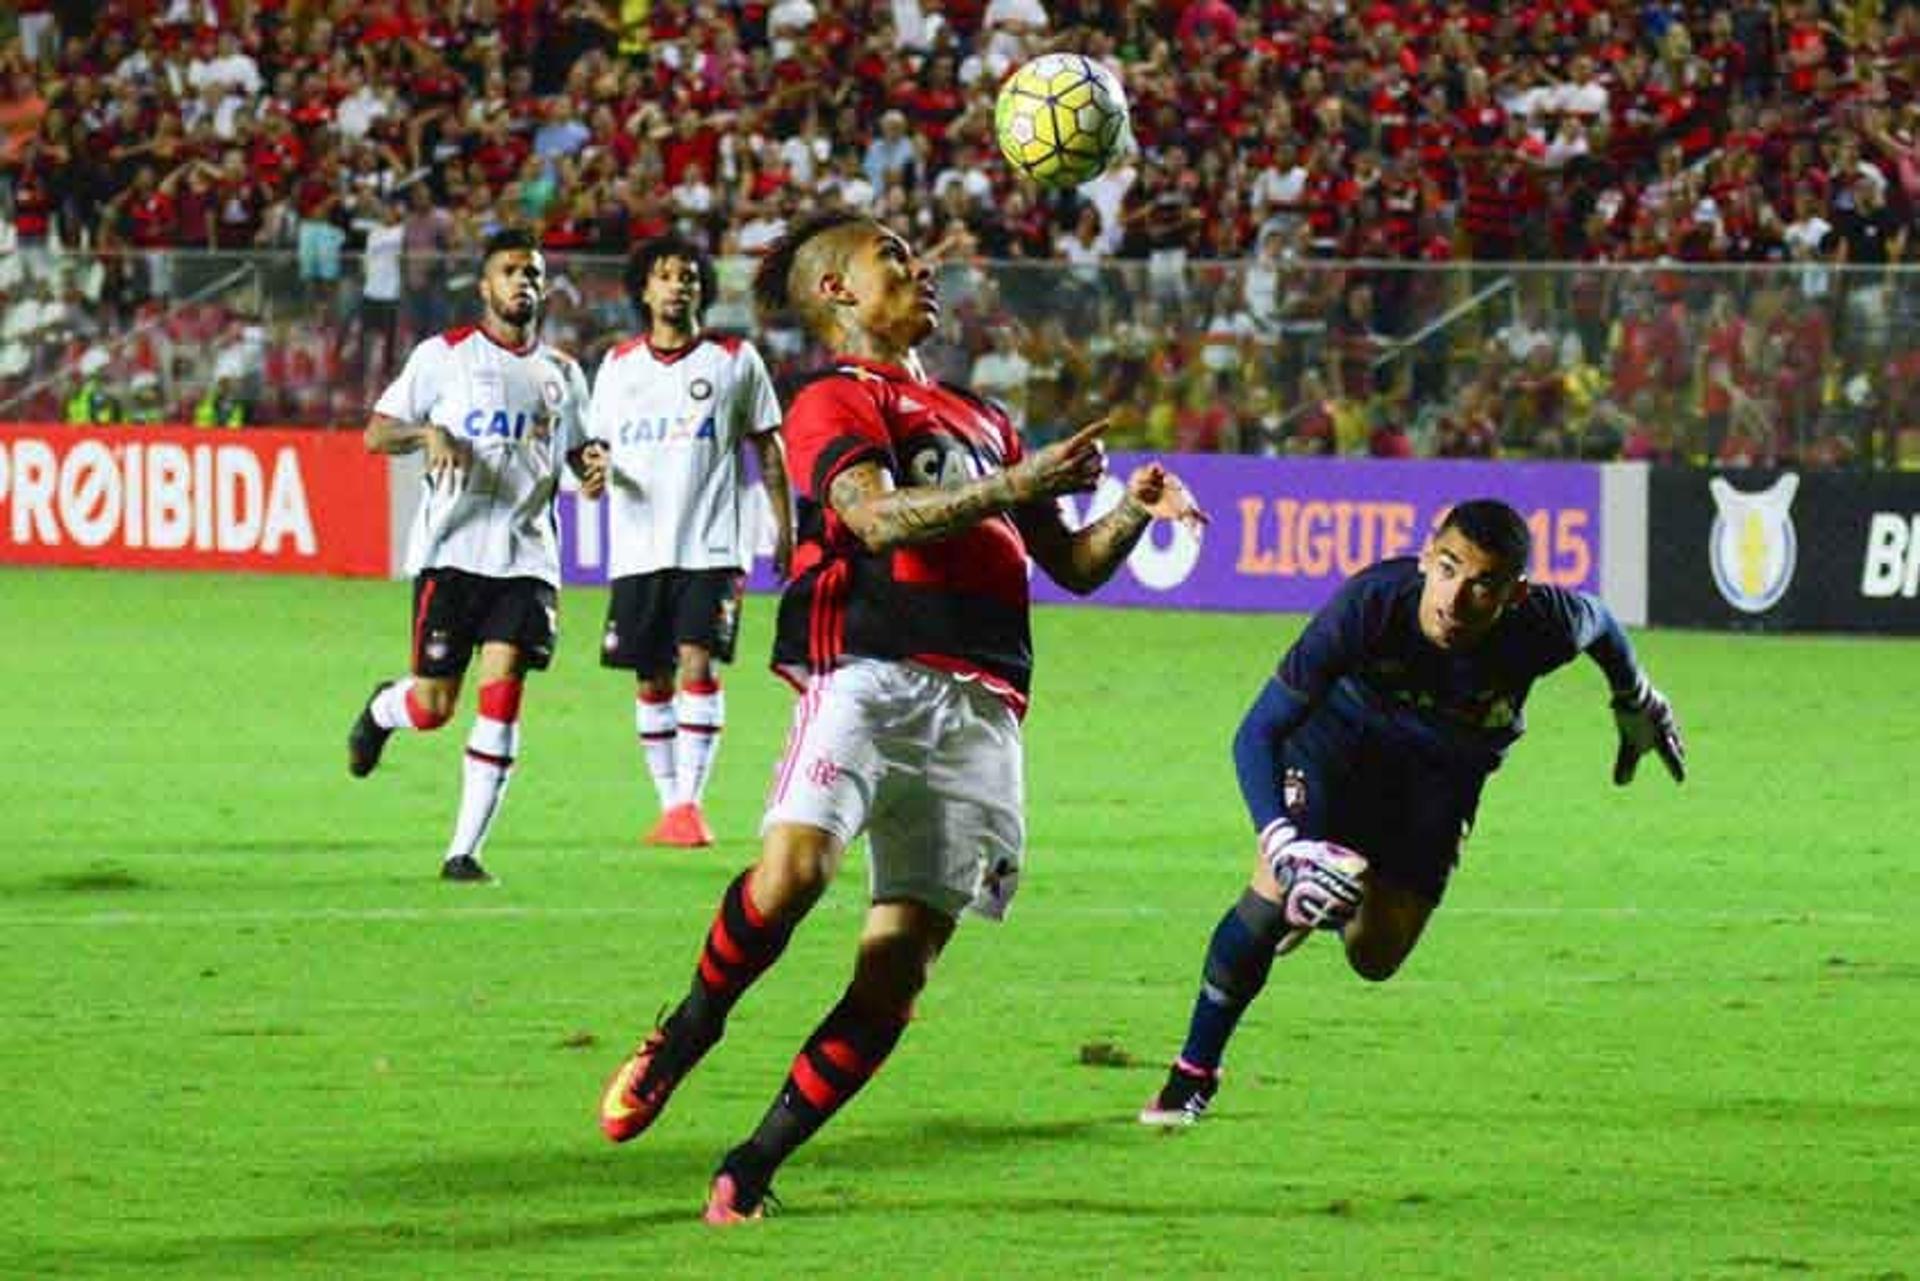 Flamengo x Atlético-PR